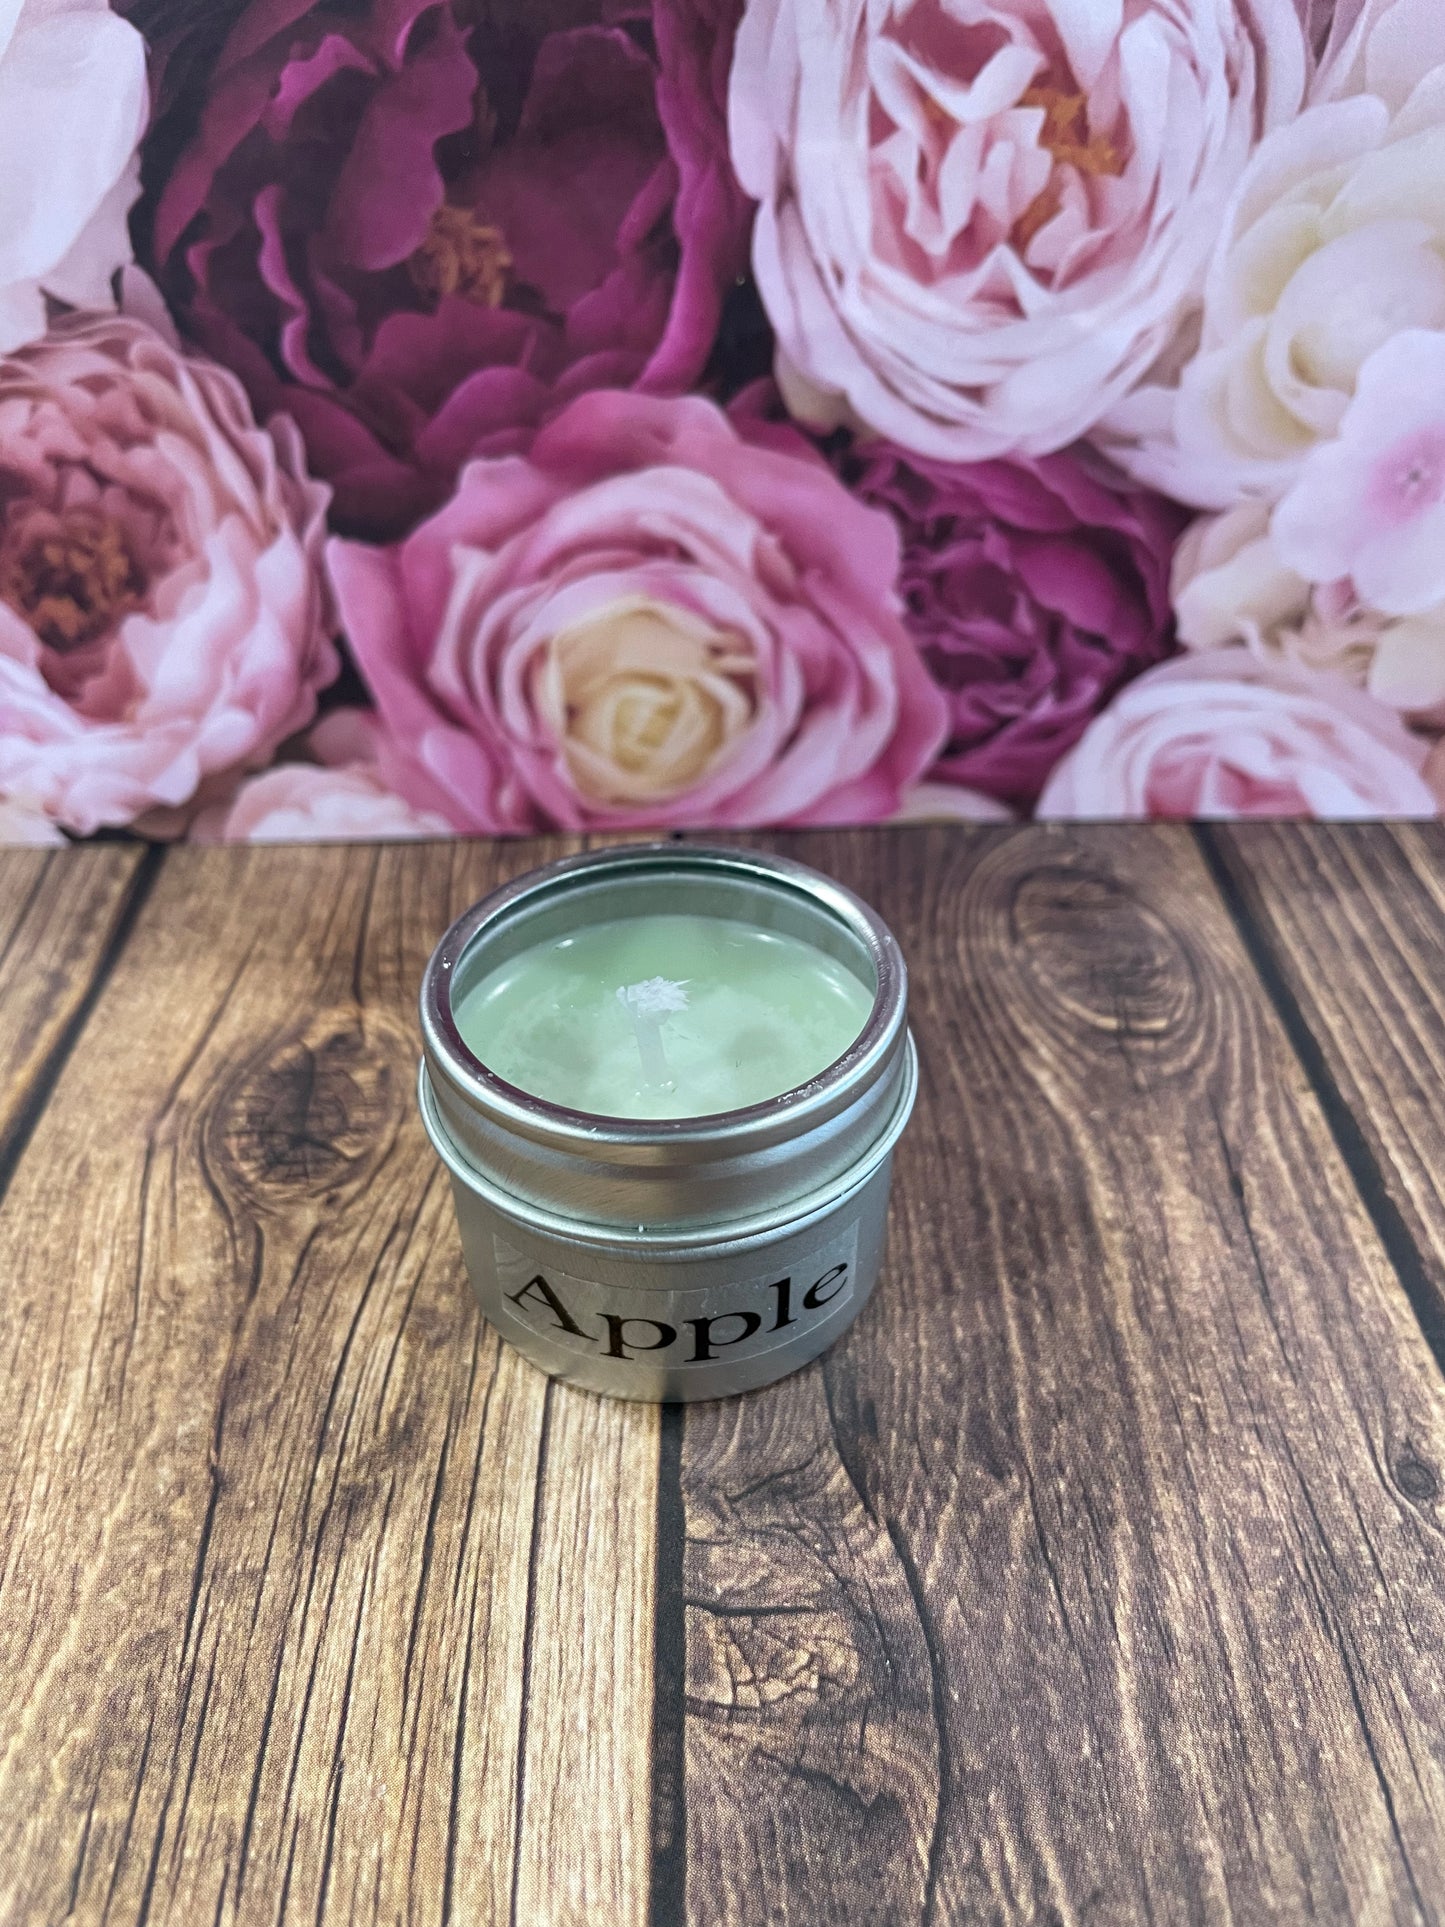 1 oz apple sample candle